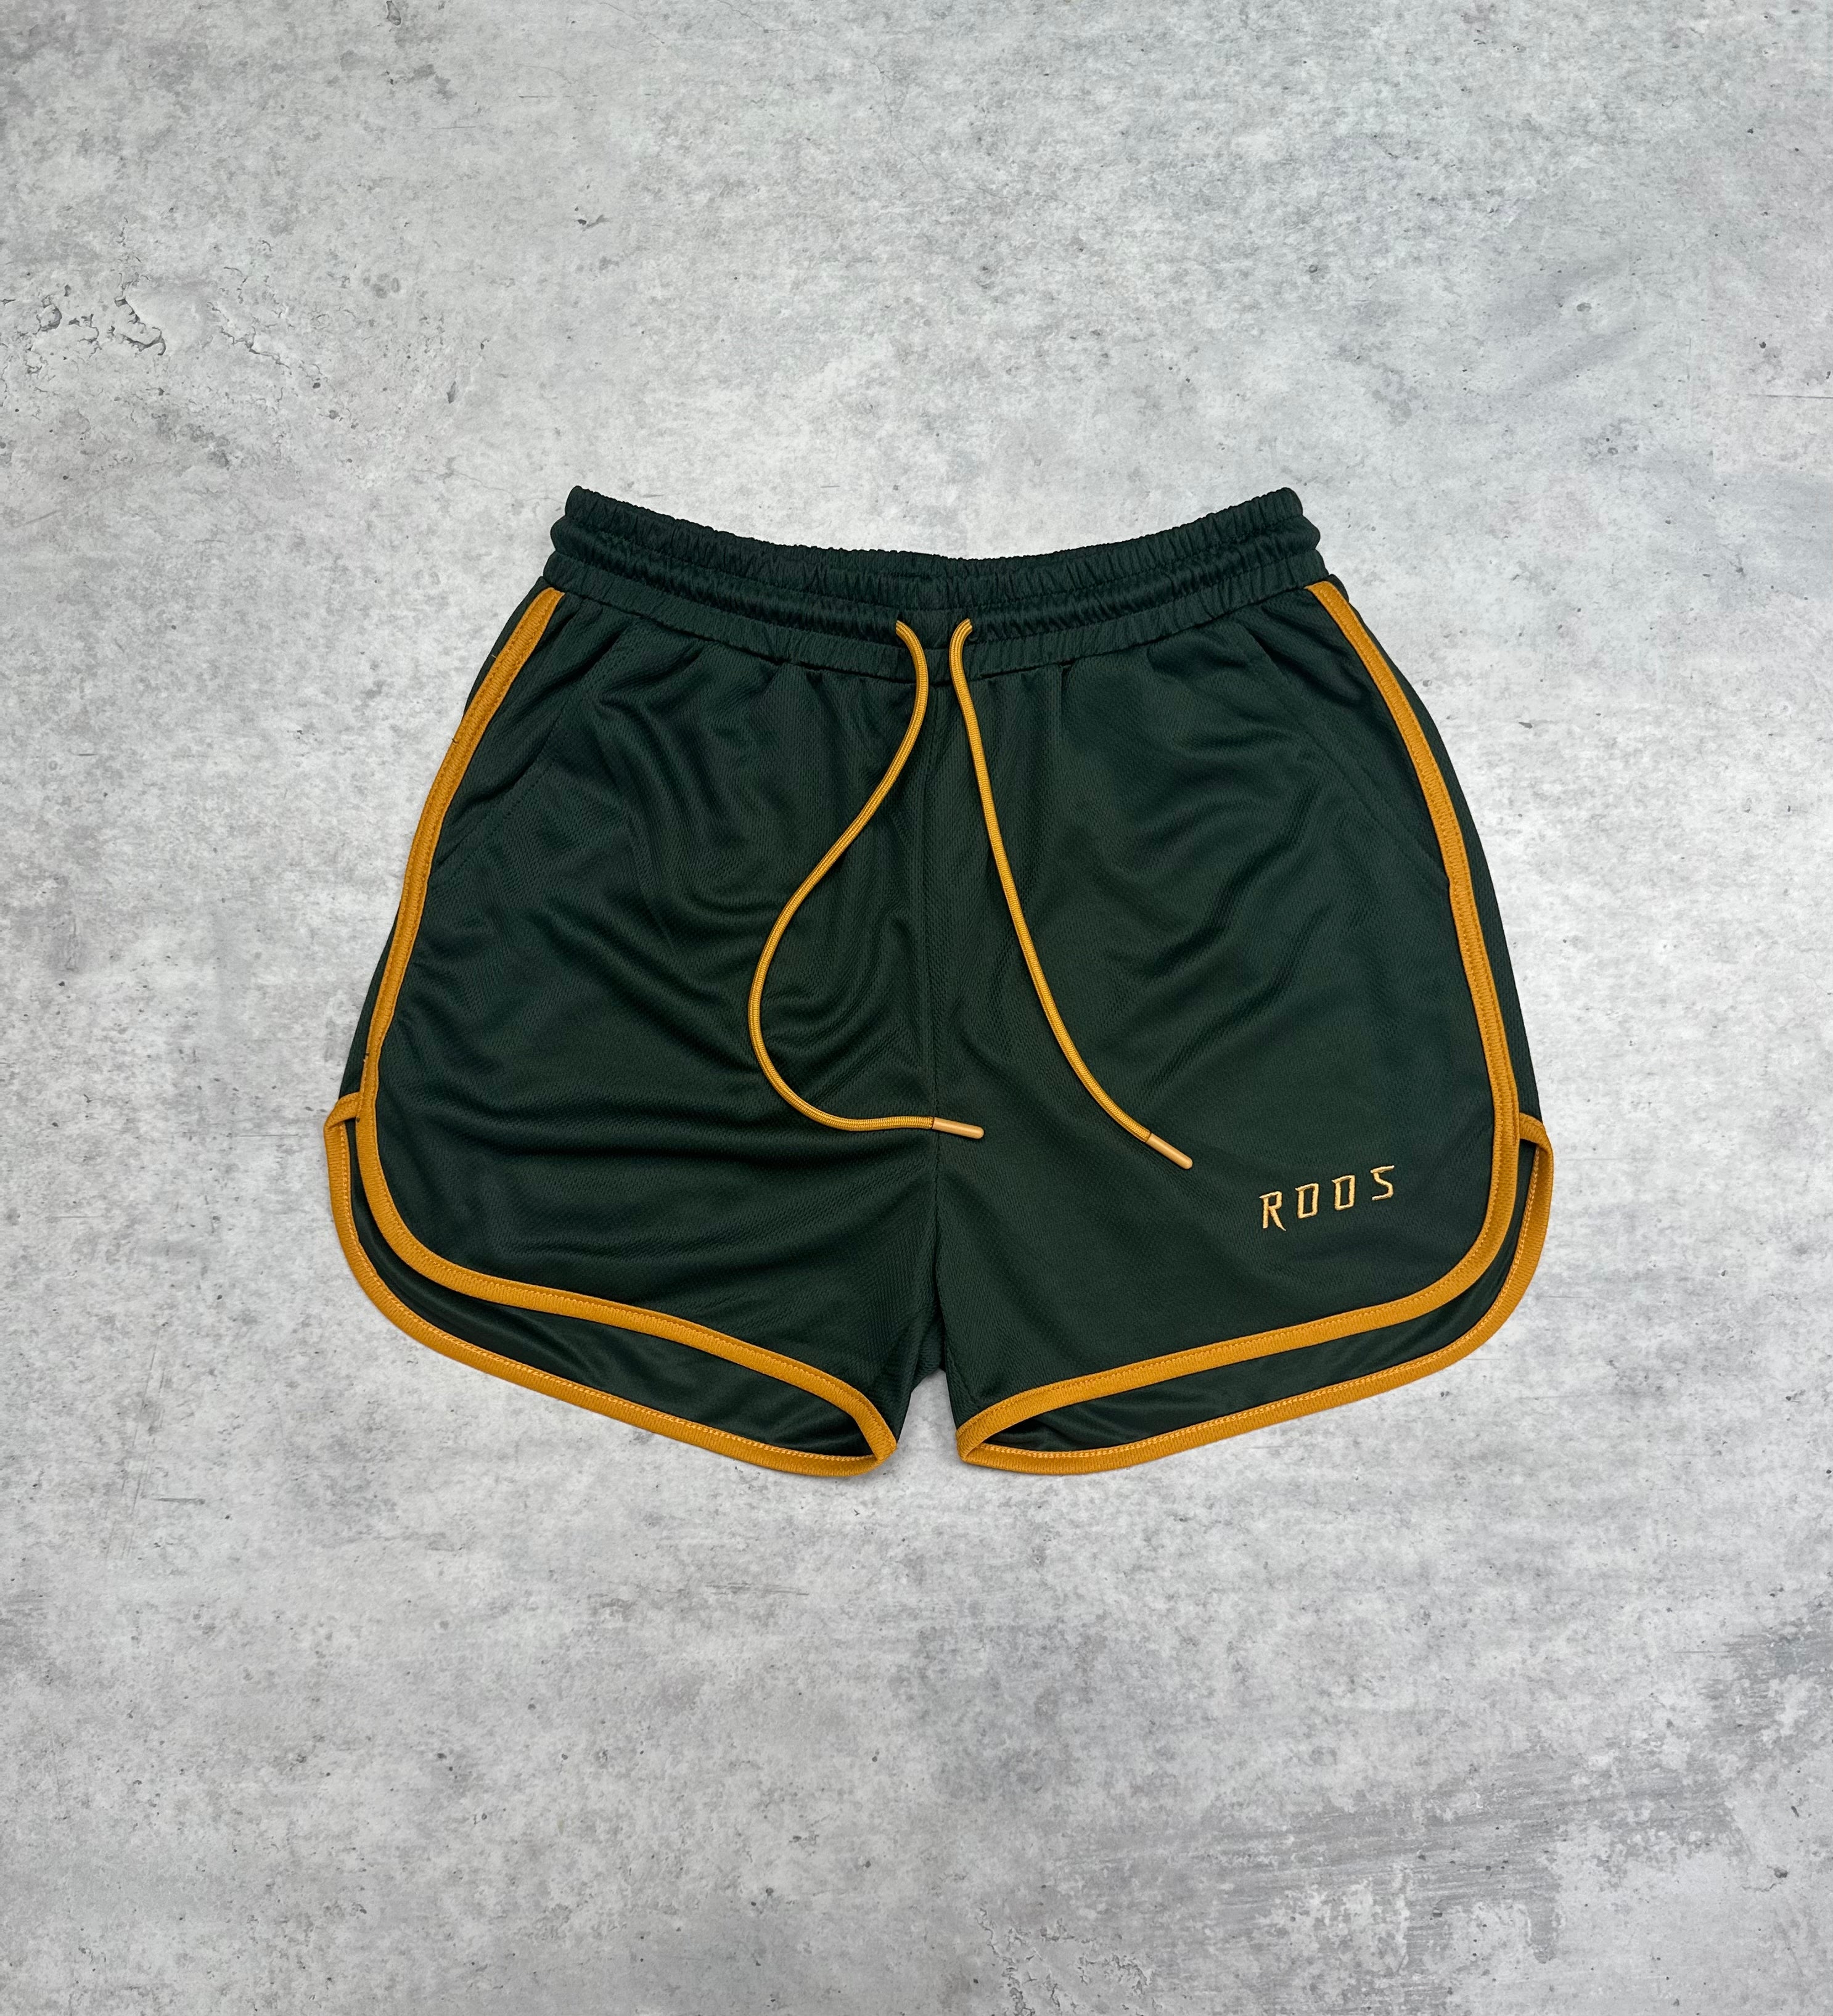 Retro Shorts - Green & Gold